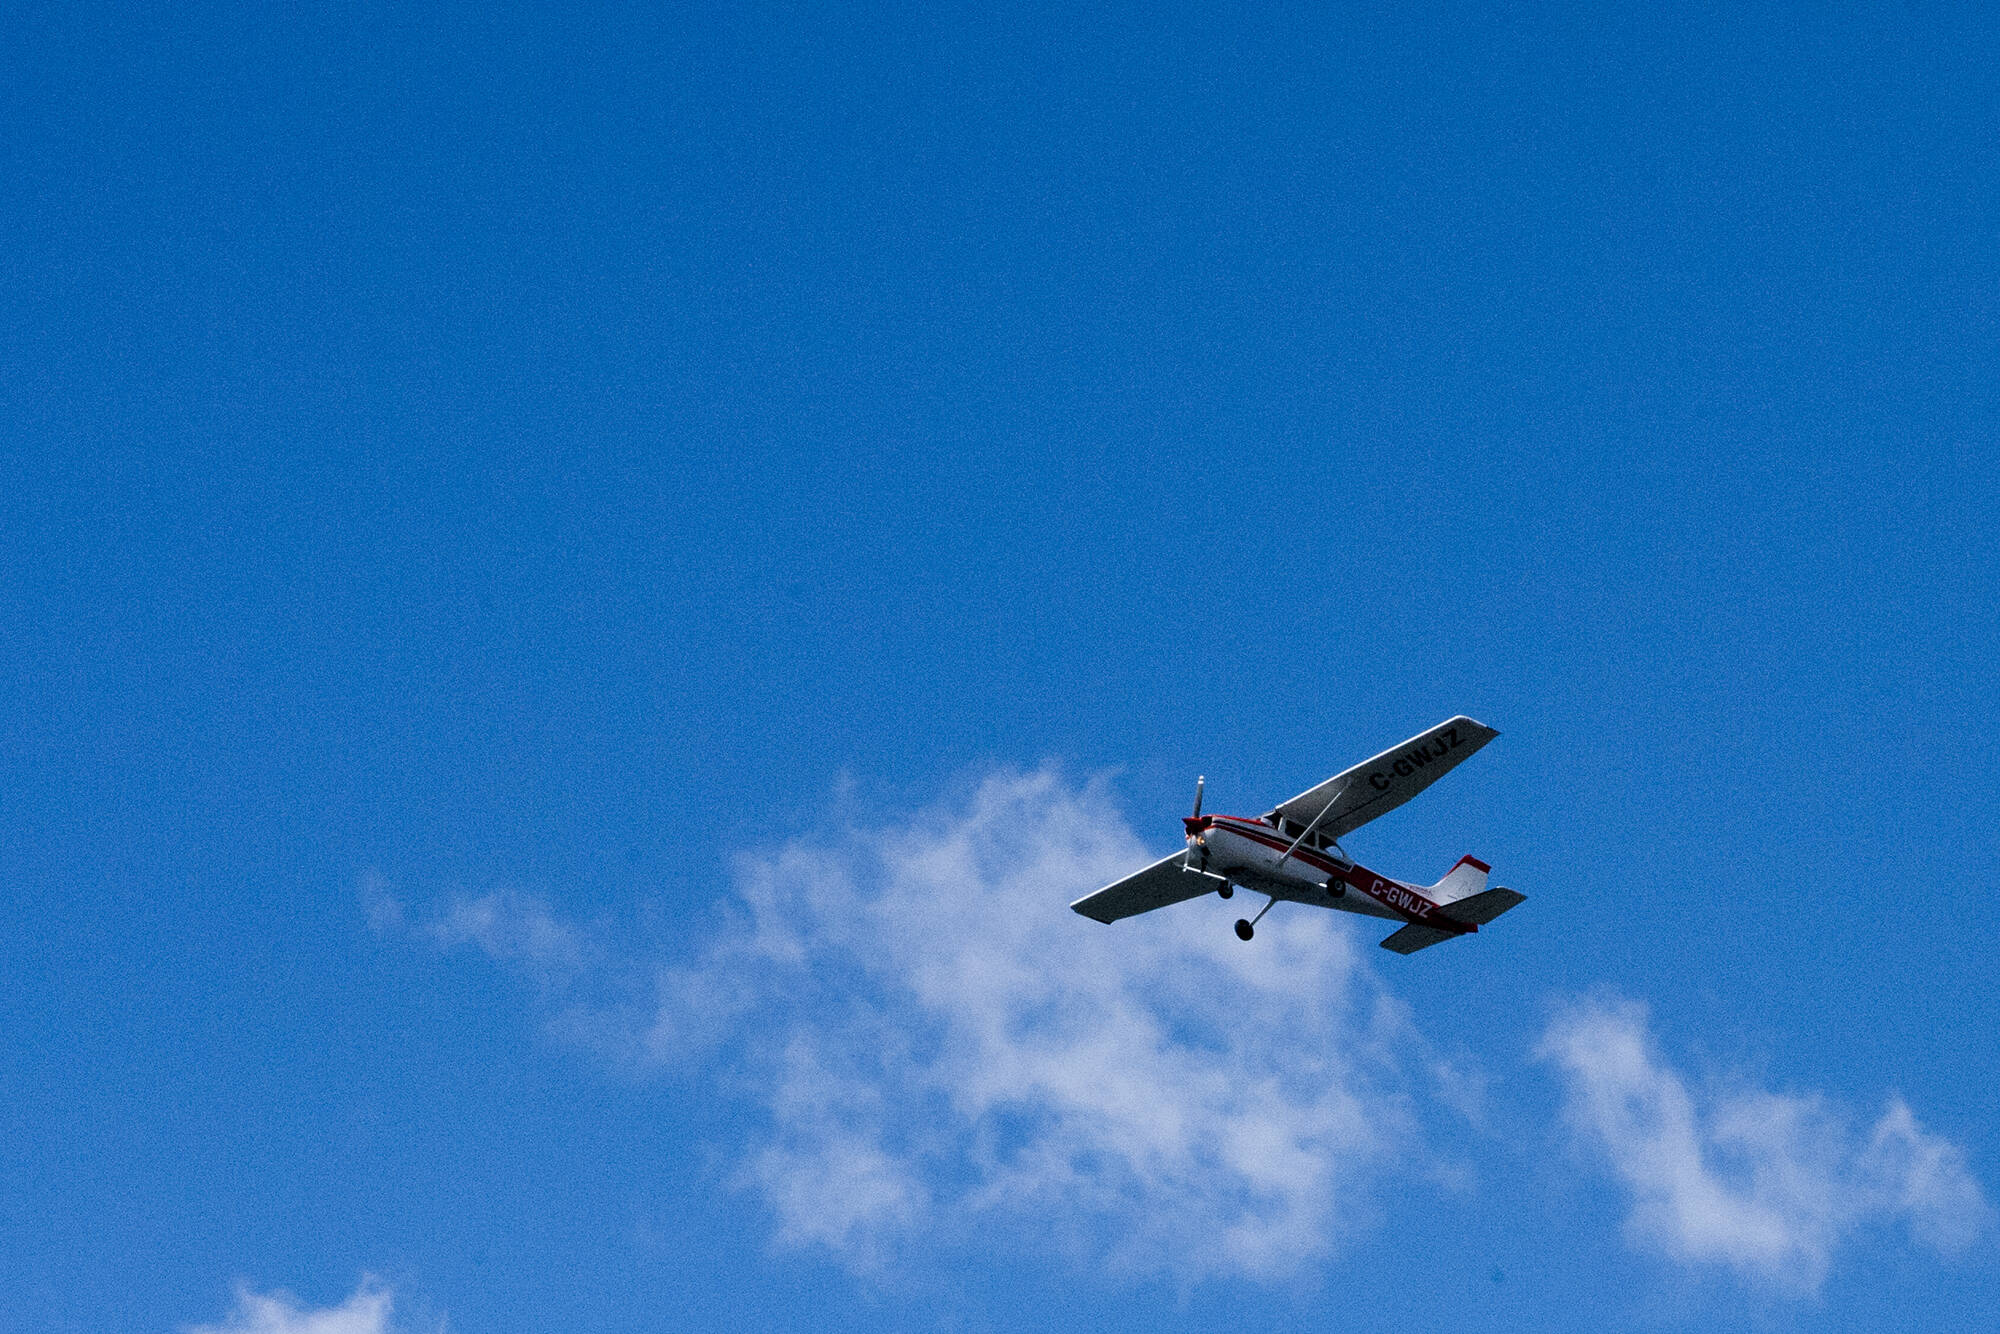 A plane flying over Okanagan Lake near downtown Kelowna on May 18, 2020. (Michael Rodriguez - Capital News)